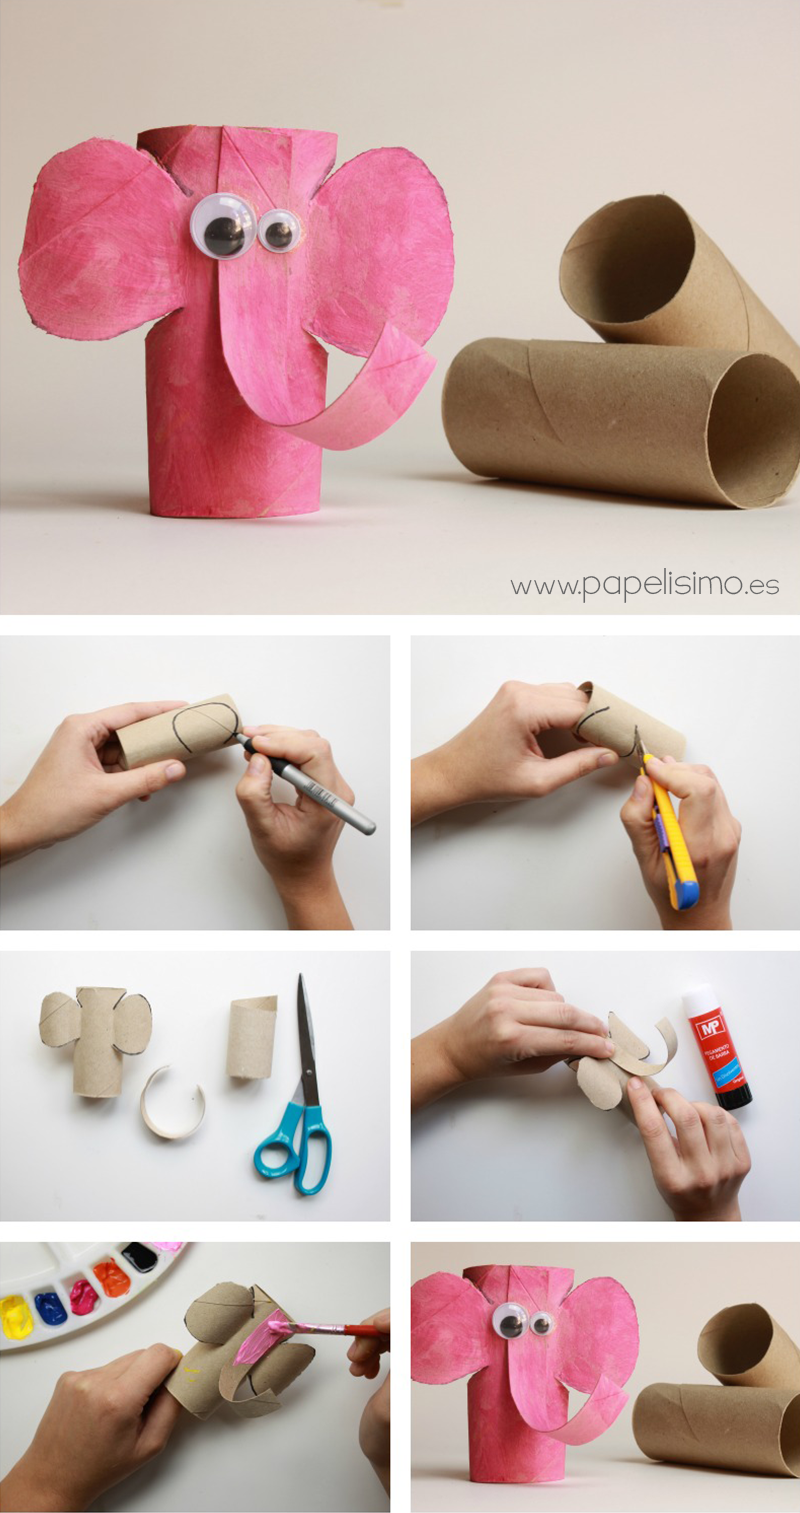 DIY Animal Craft Ideas With Toilet Paper Rolls | Home Design, Garden &  Architecture Blog Magazine - Page 2